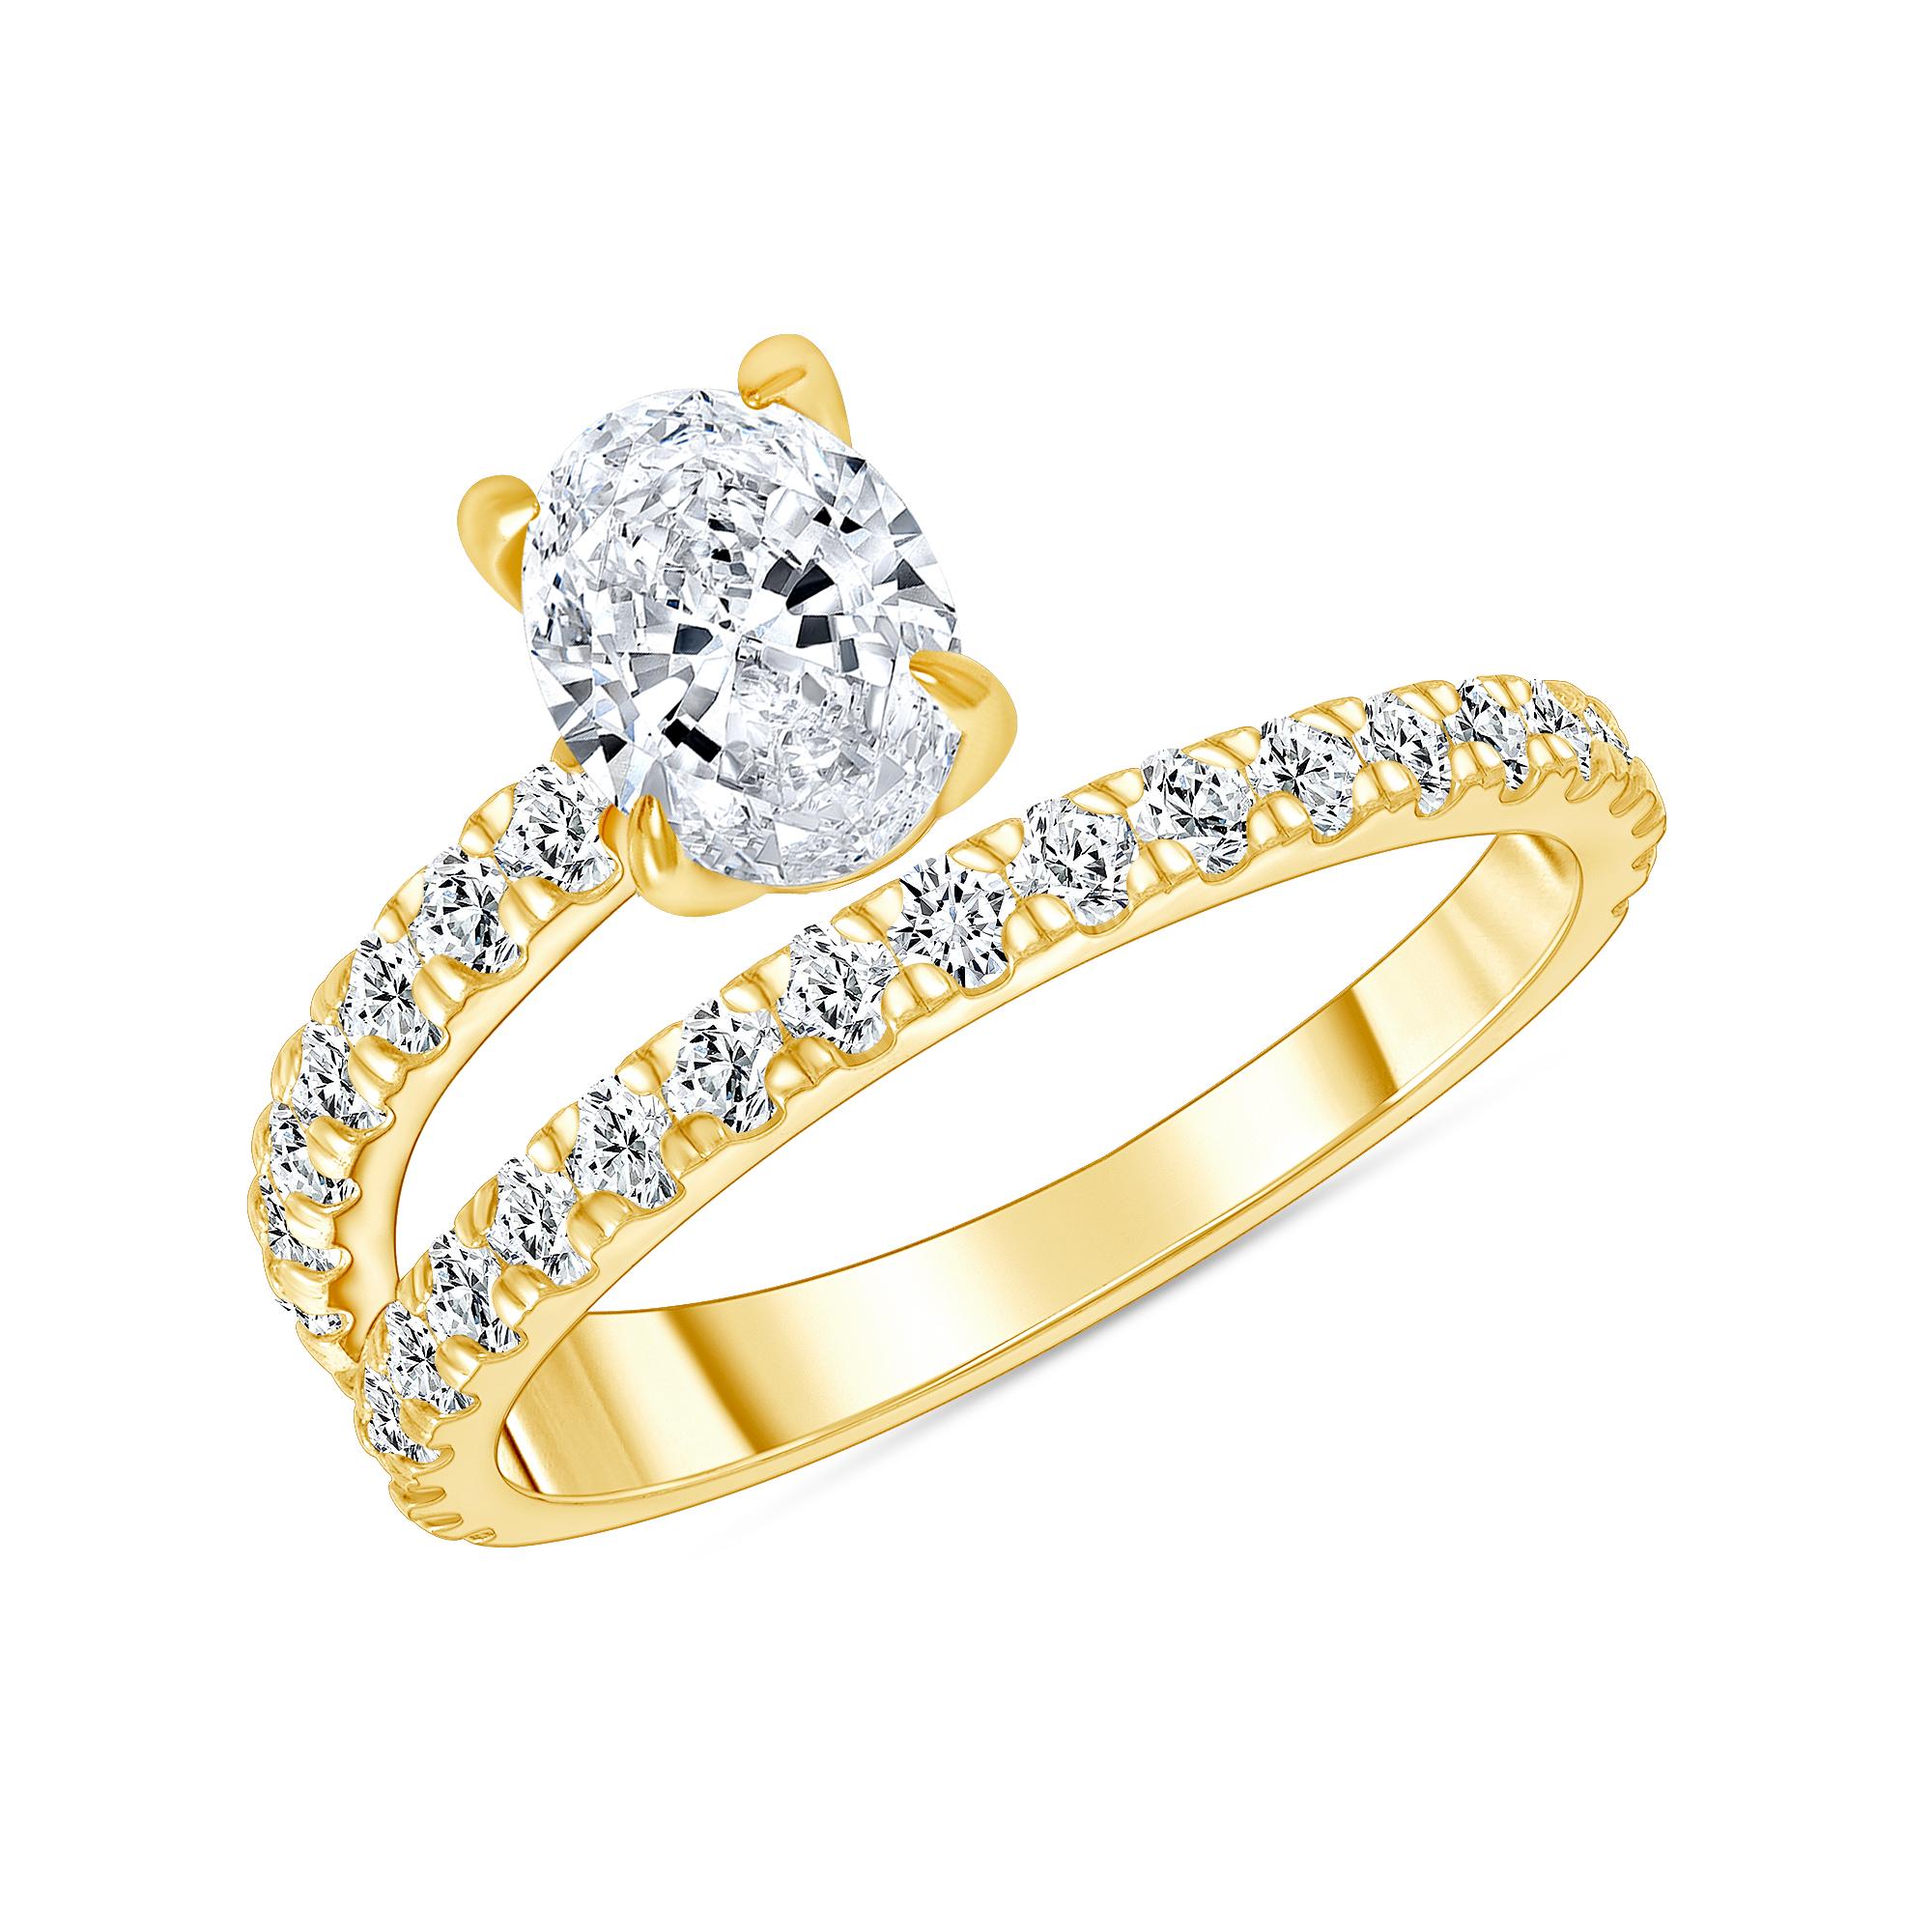 For Sale:  0.75 Carat Oval Cut Diamond Engagement Ring Design, '0.50 Carat Center Diamond' 3